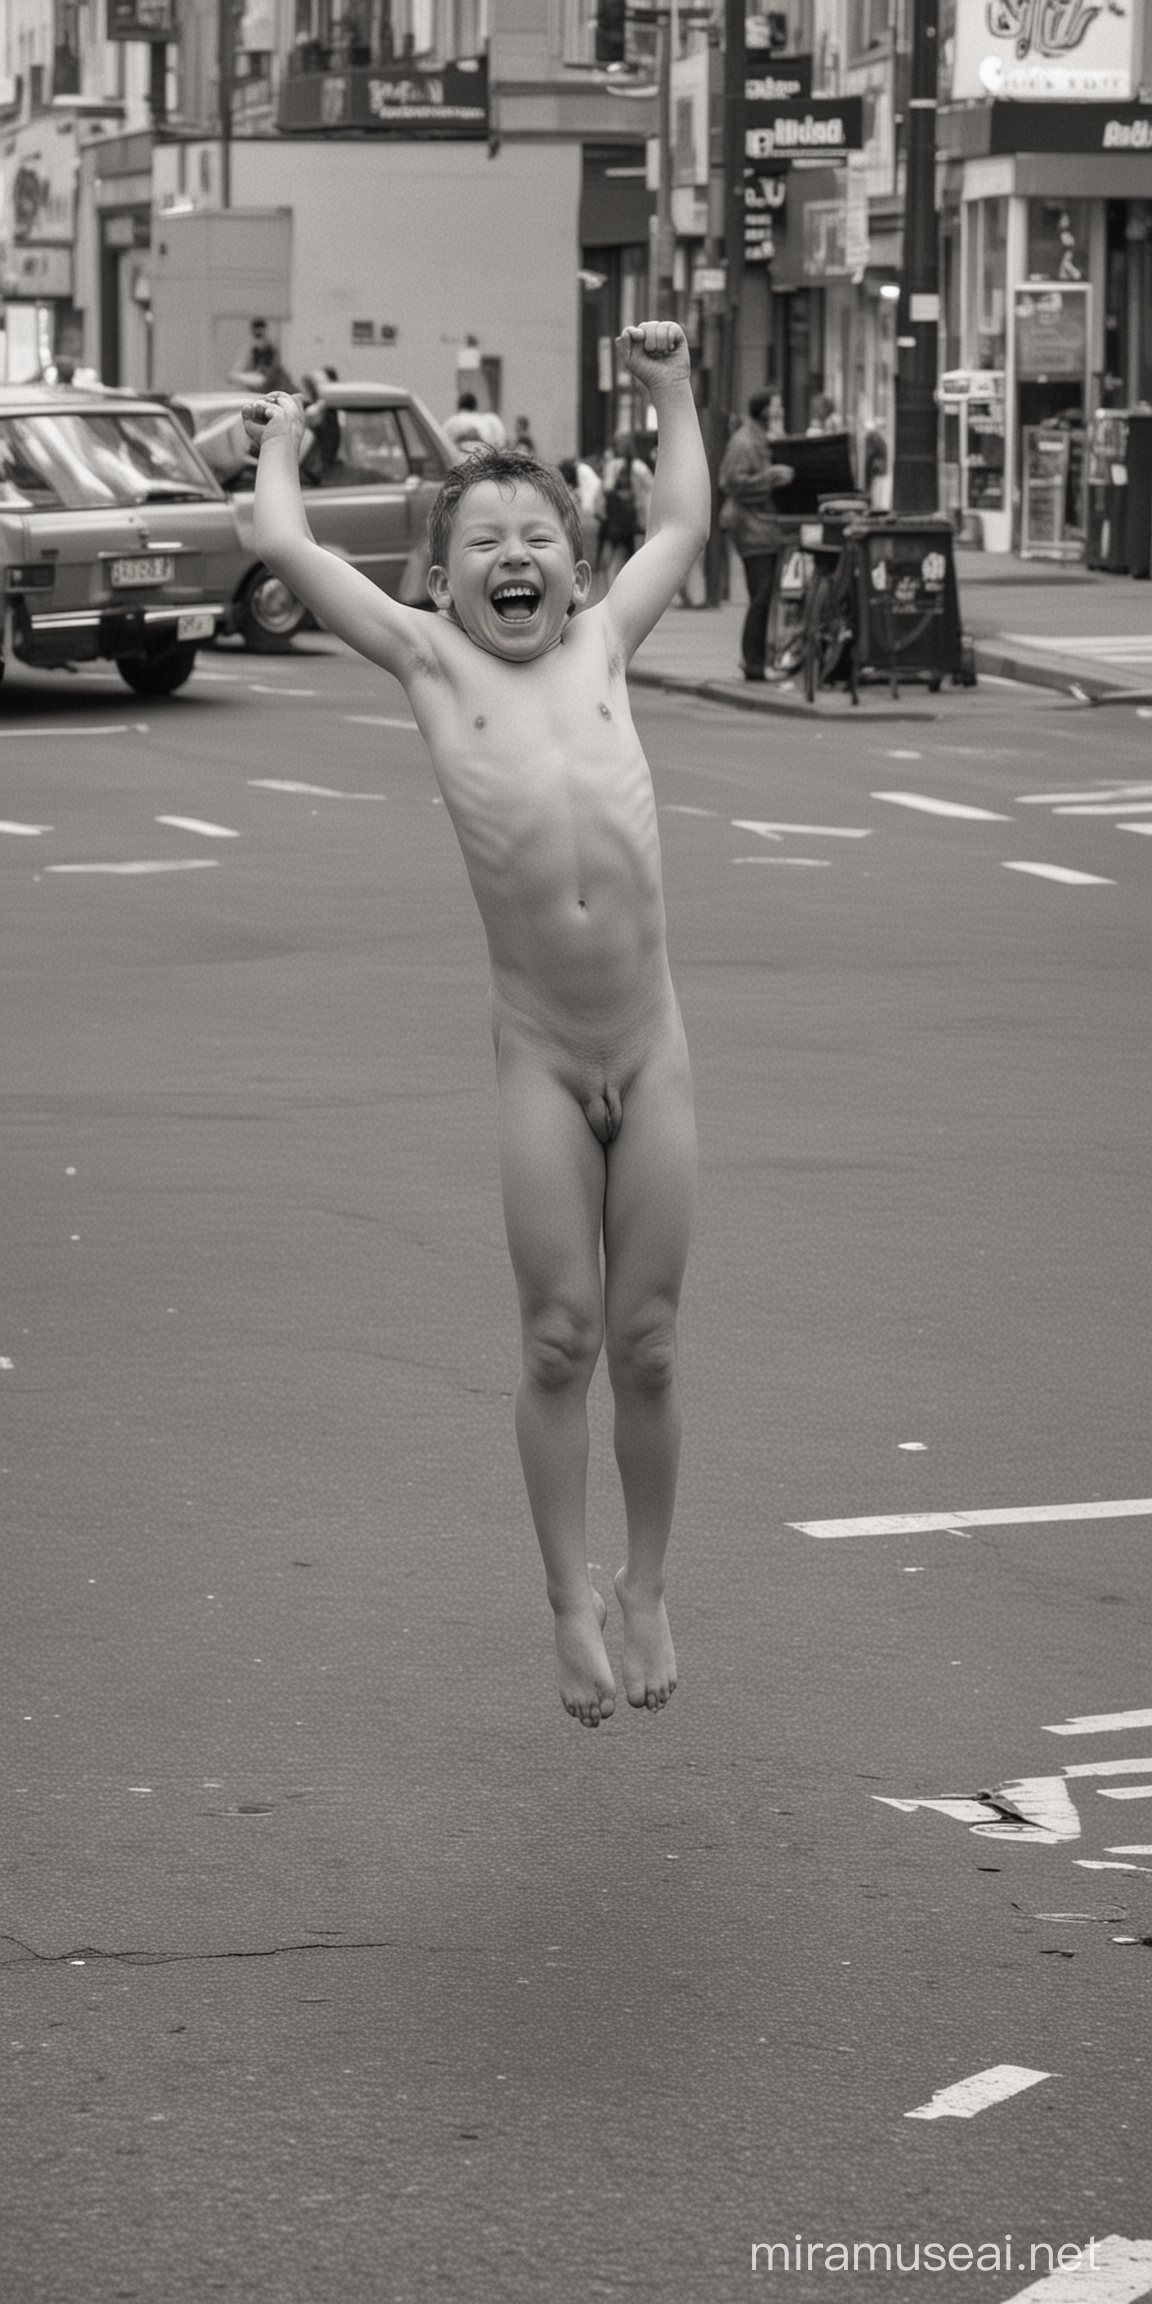 Joyful Naked Boy Somersaulting on Busy Street Hallelujah Saturday Celebration